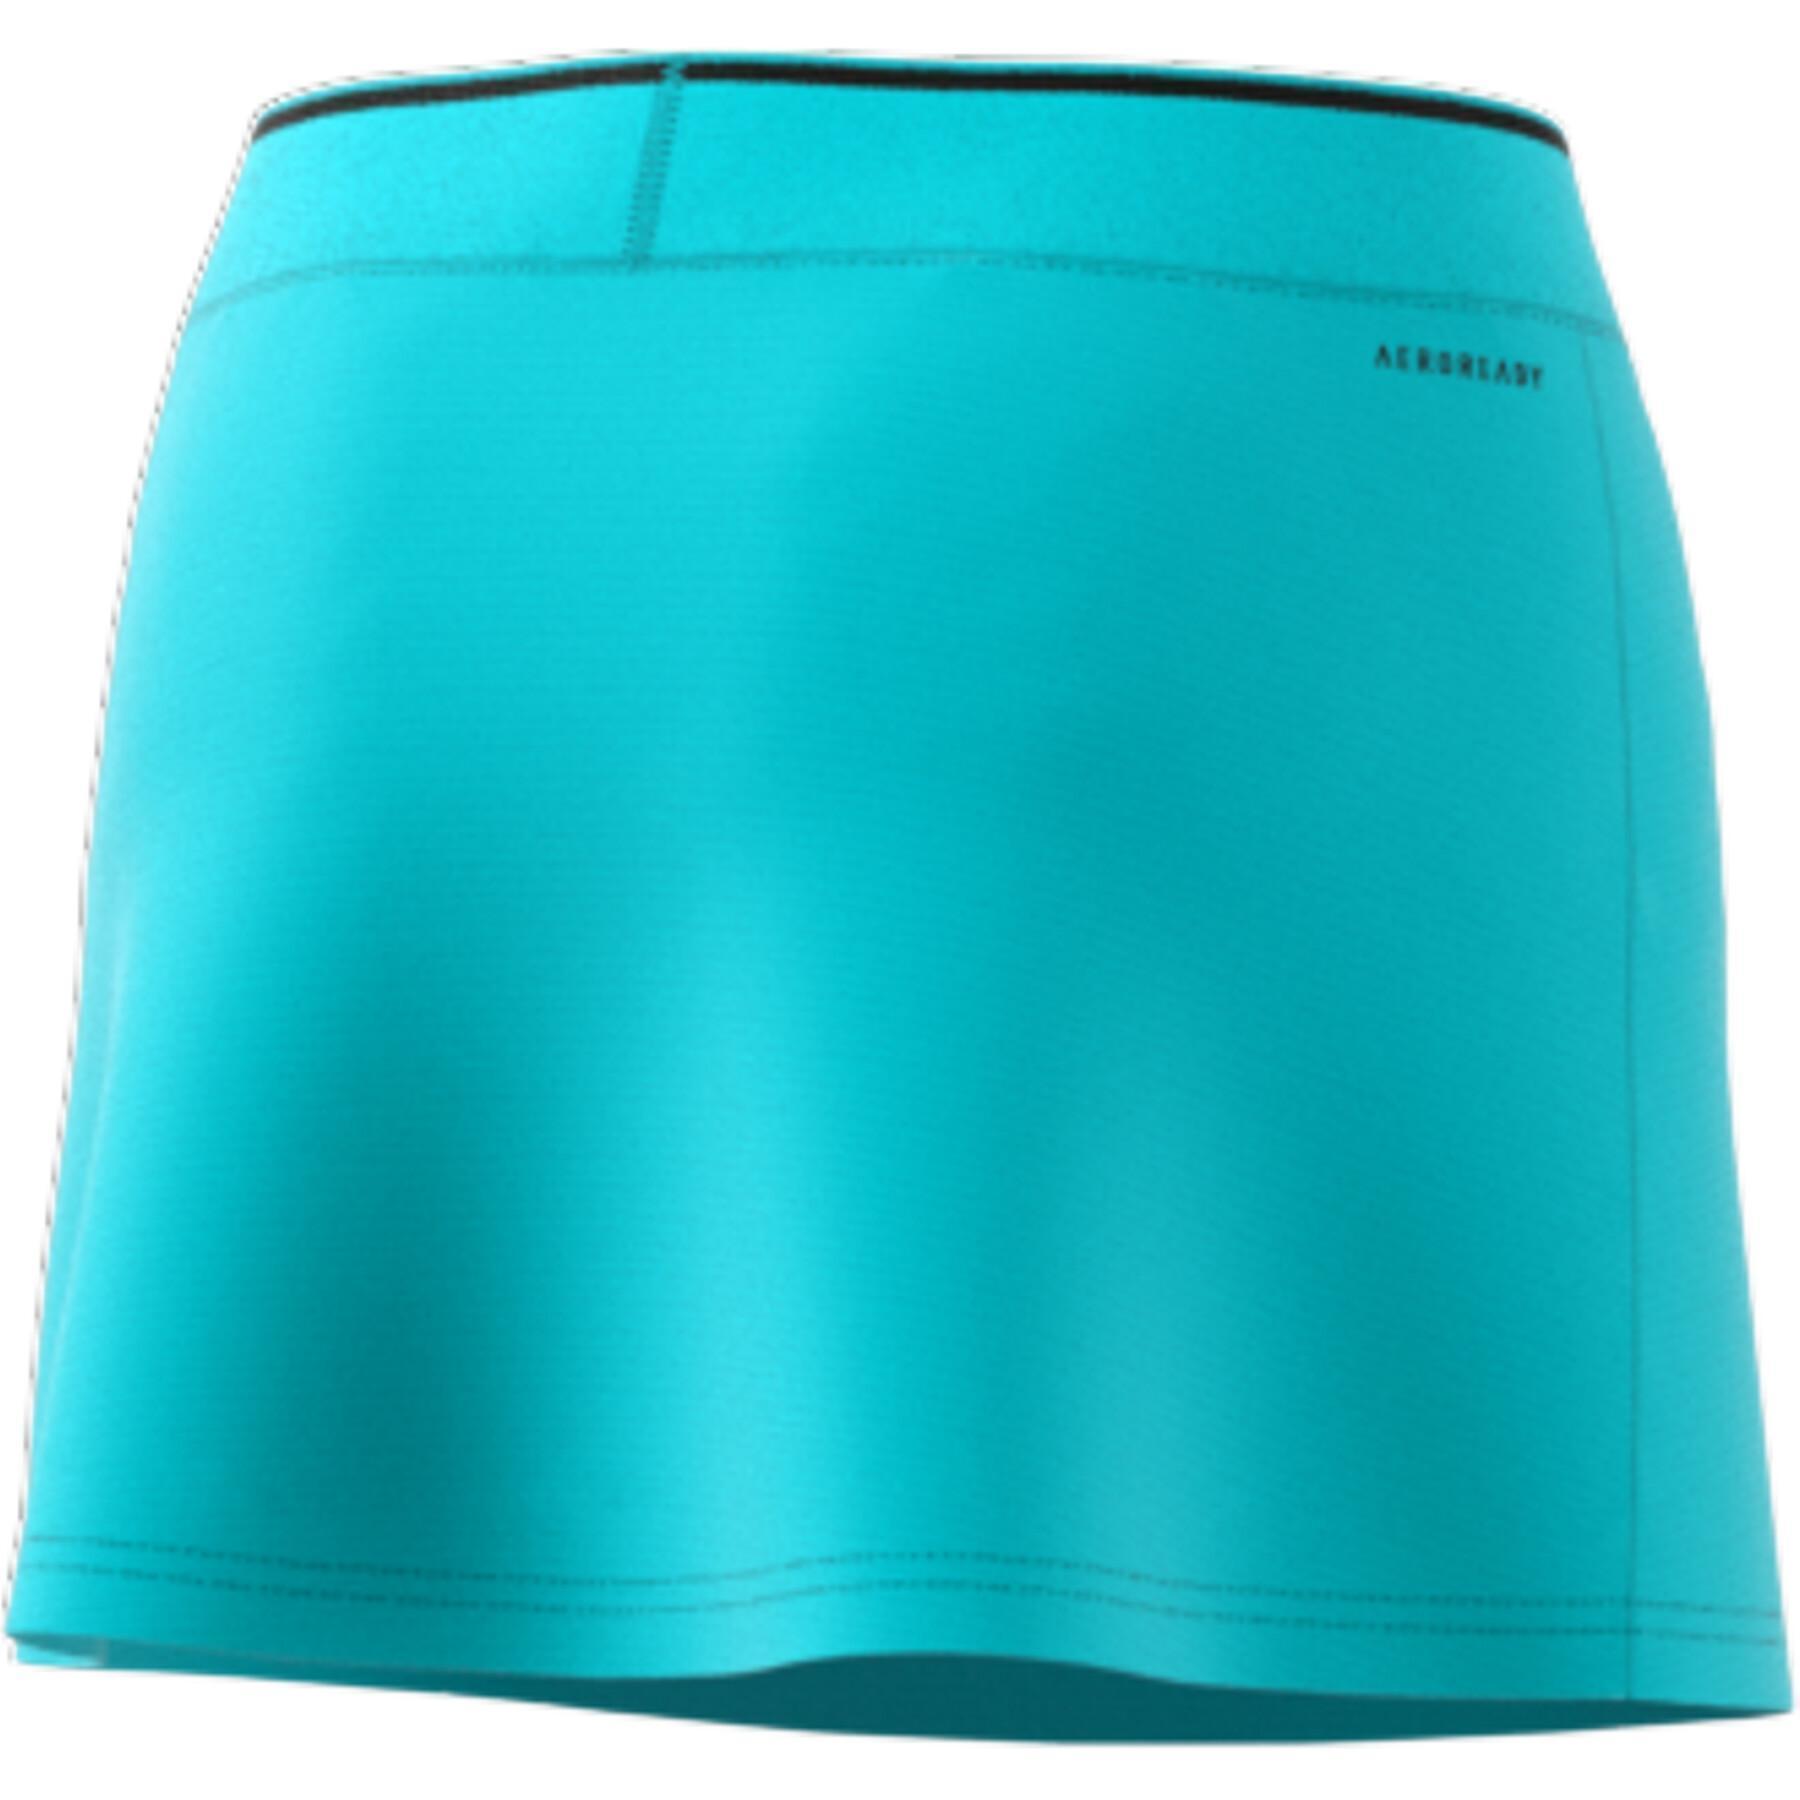 Women's skirt adidas Club Tennis